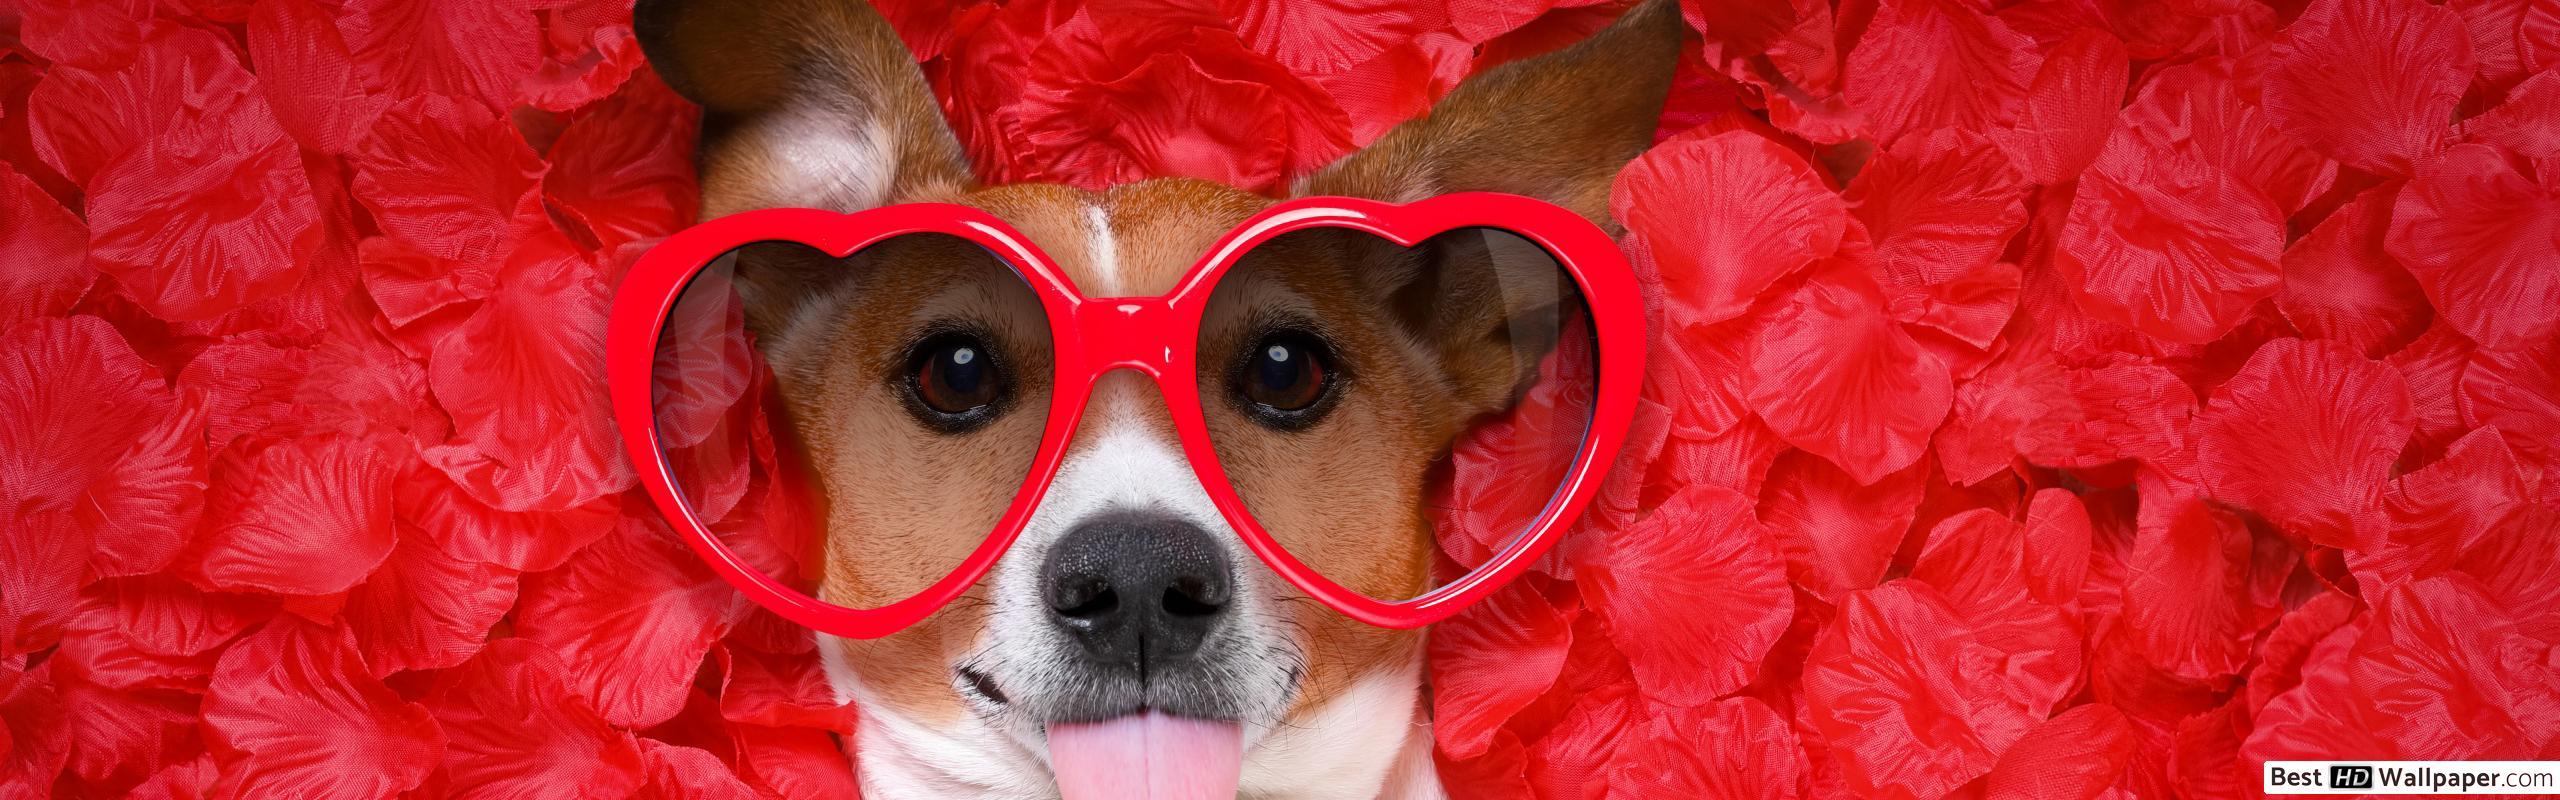 Valentine's day dog in heart glasses HD wallpaper